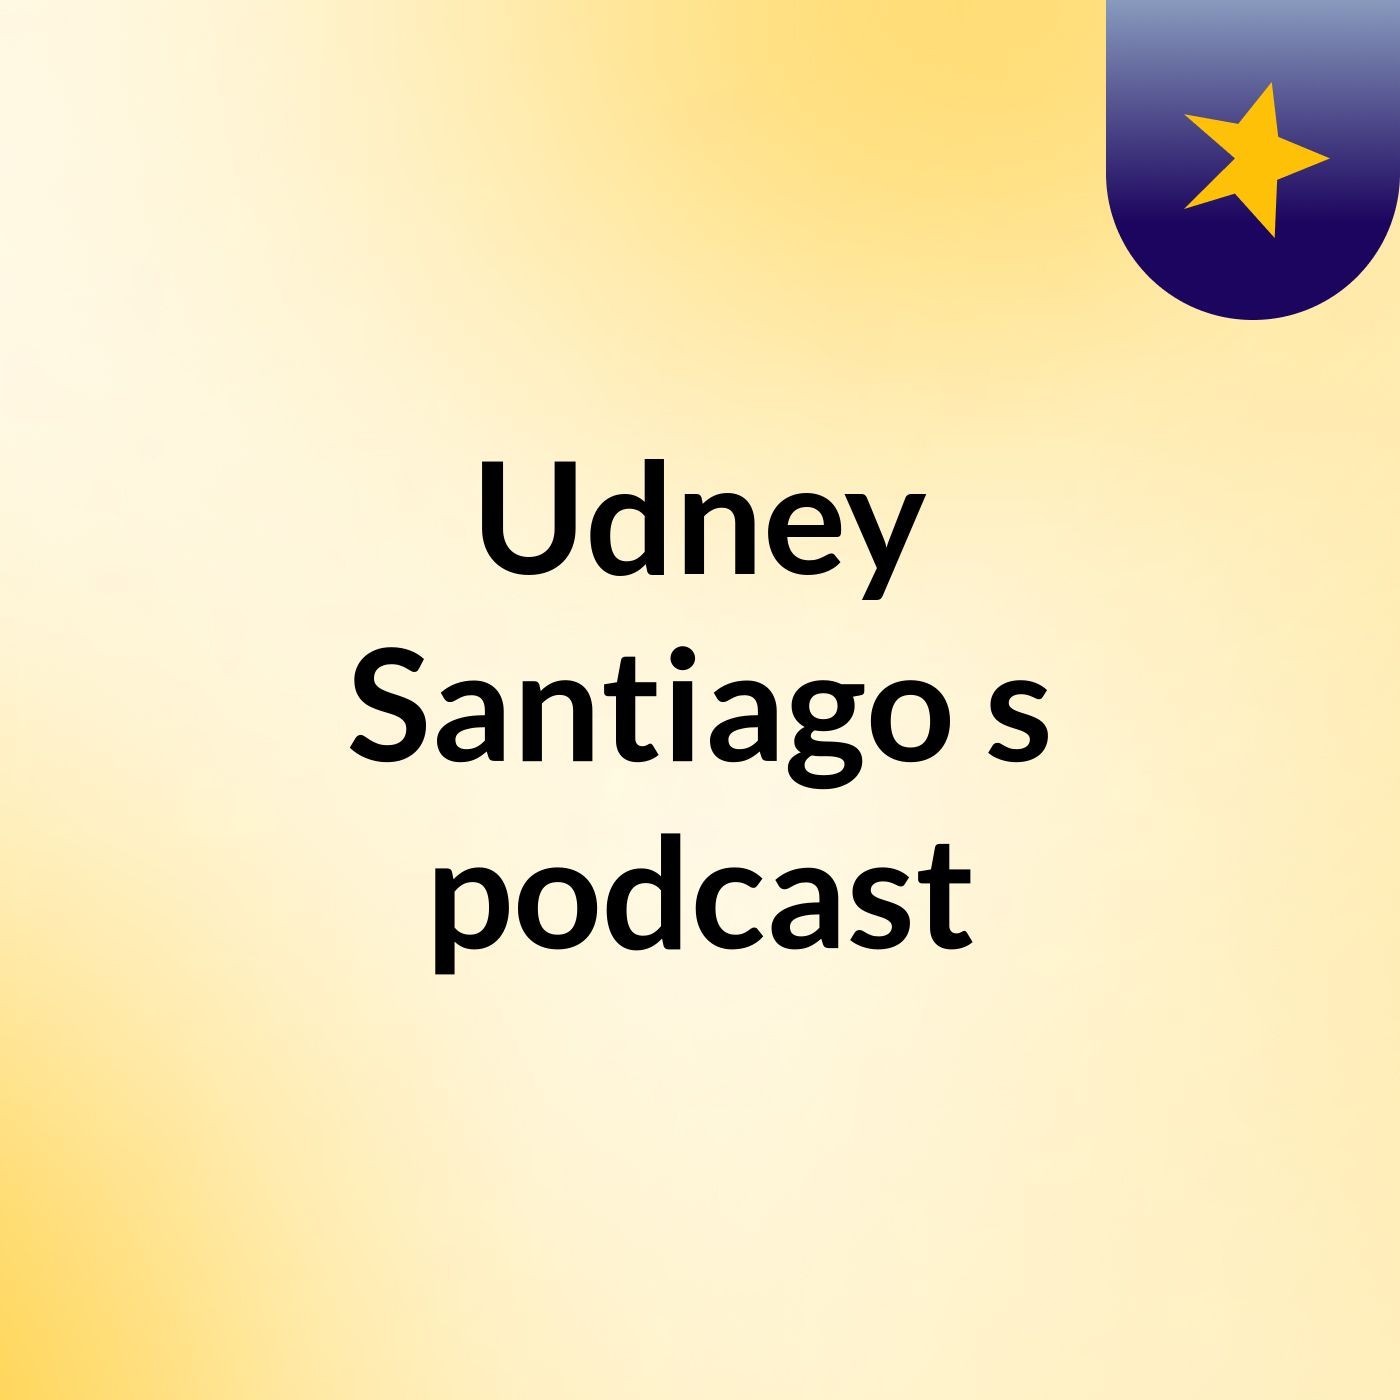 Episódio 13 - Udney Santiago's podcast